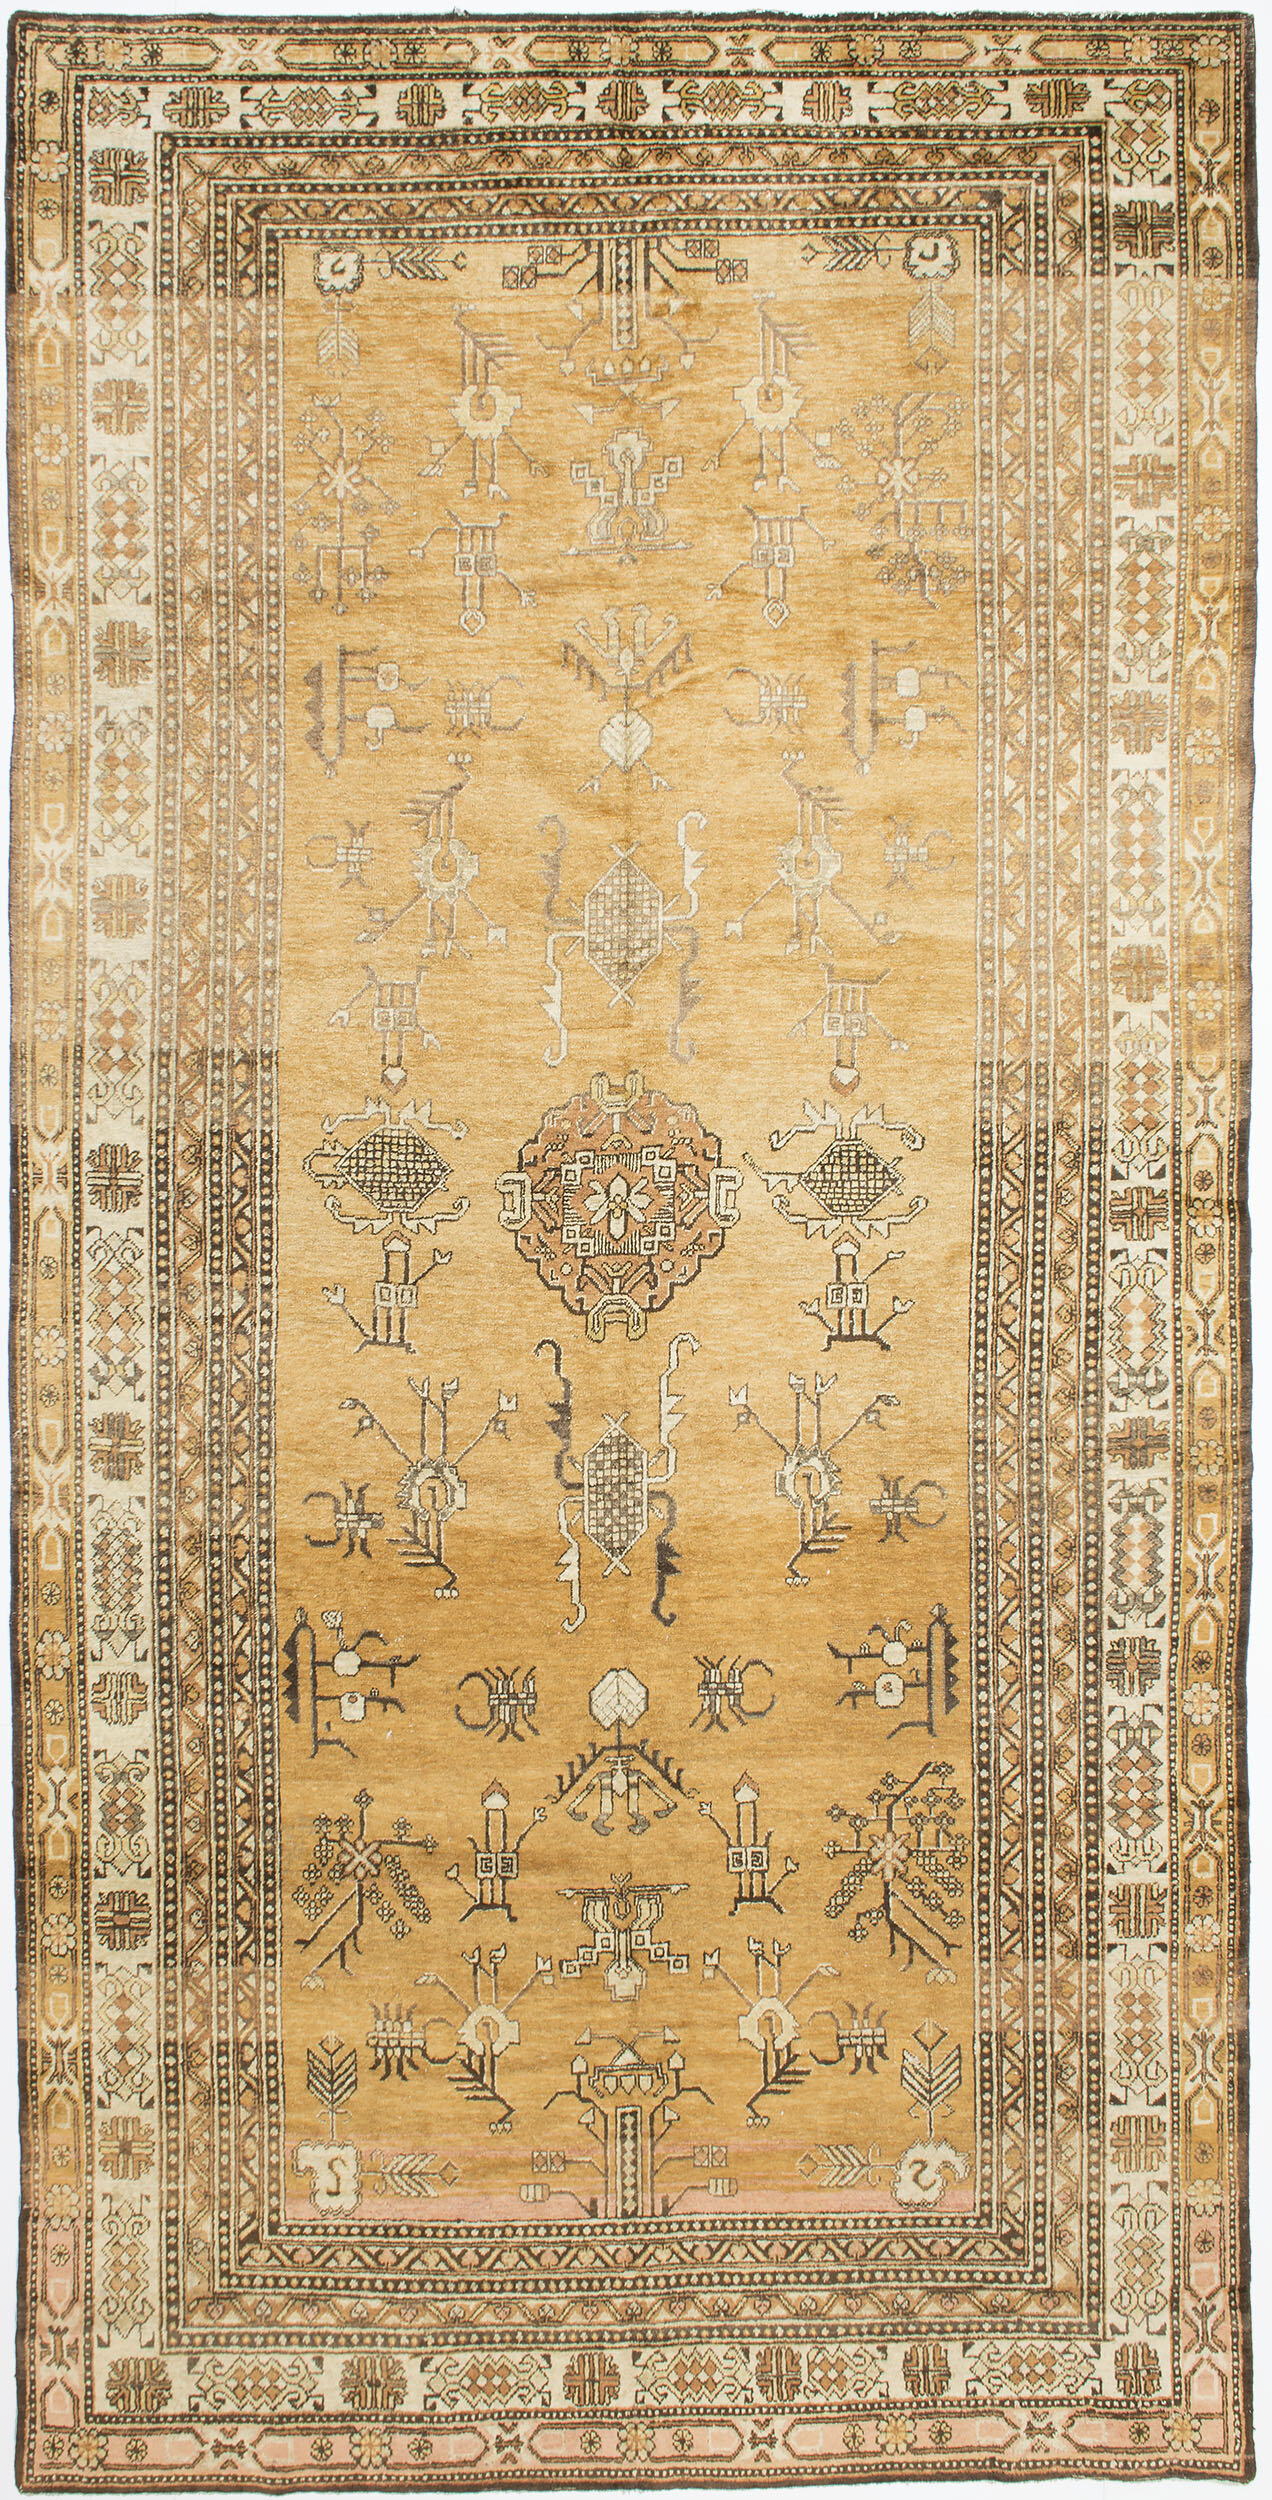 Khotan Gallery Carpet 13' 4" x 6' 7" 